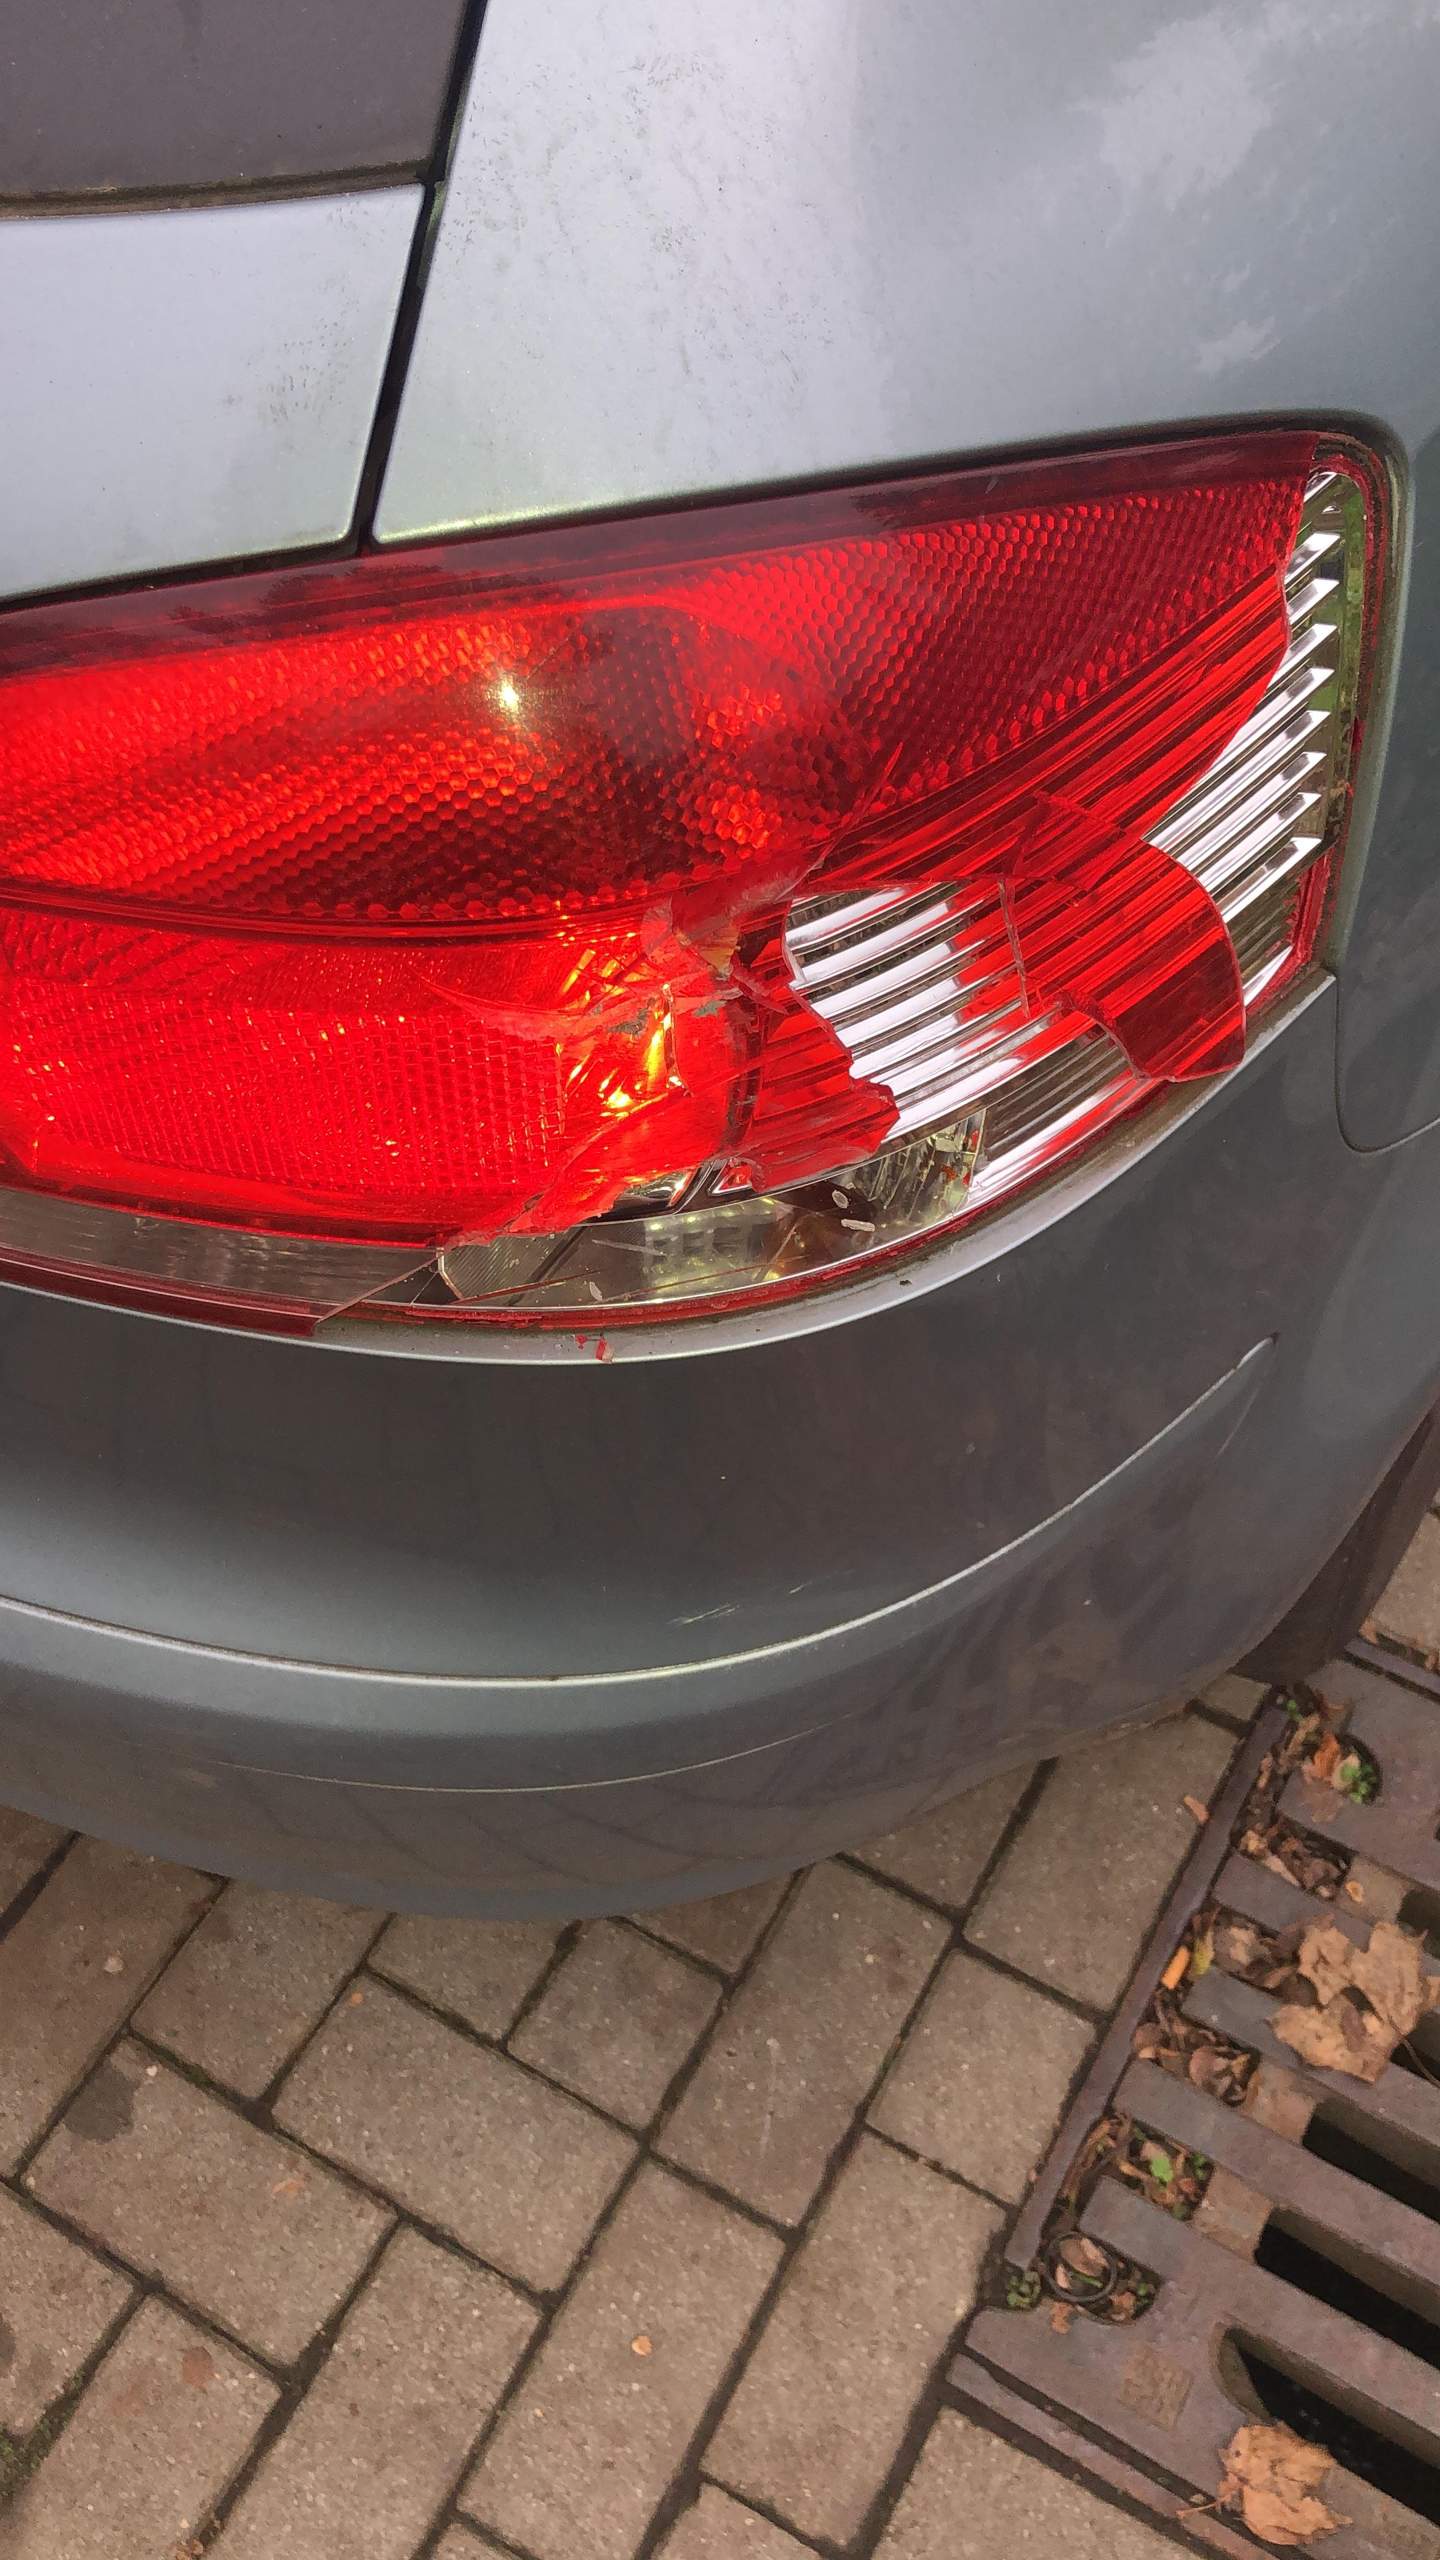 Plastik von Audi A3 Rückleuchte kaputt? (Auto, Auto und Motorrad